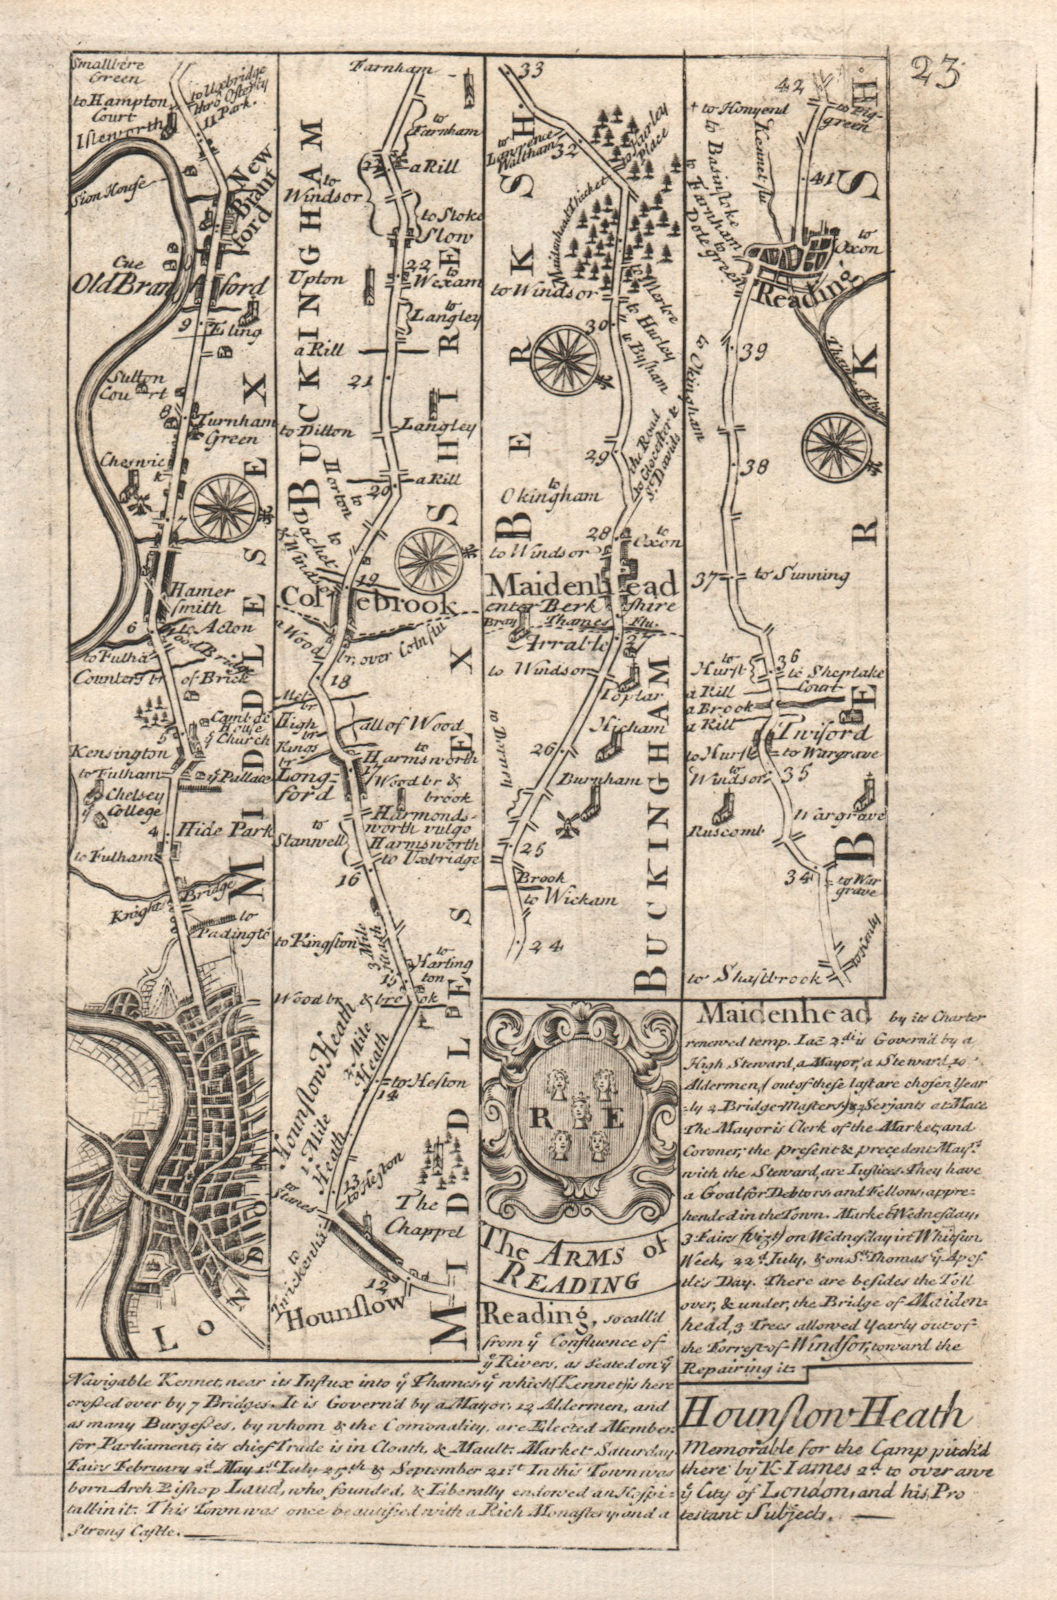 London-Kensington-Hammersmith-Hounslow-Maidenhead-Reading OWEN/BOWEN map 1753